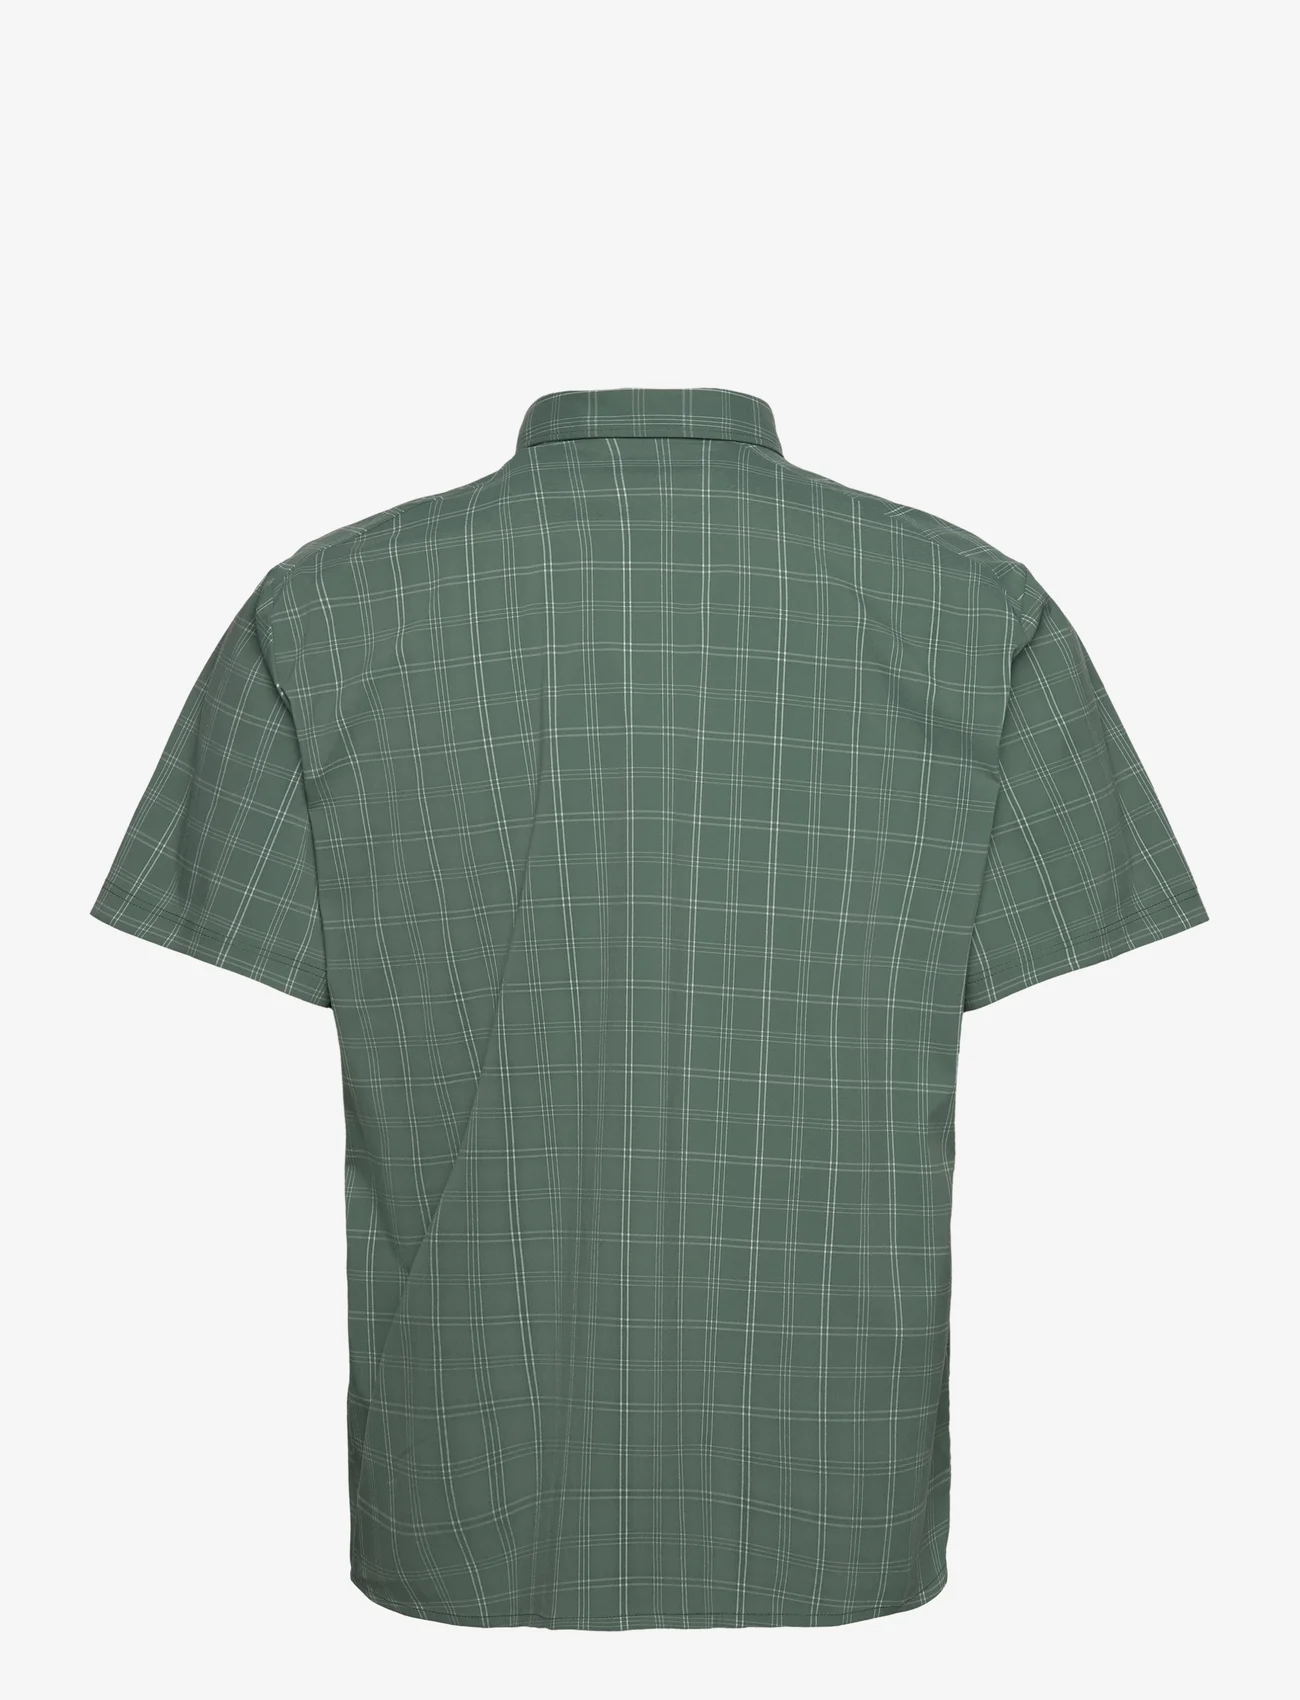 Jack Wolfskin - NORBO S/S SHIRT M - ternede skjorter - hedge green checks - 1